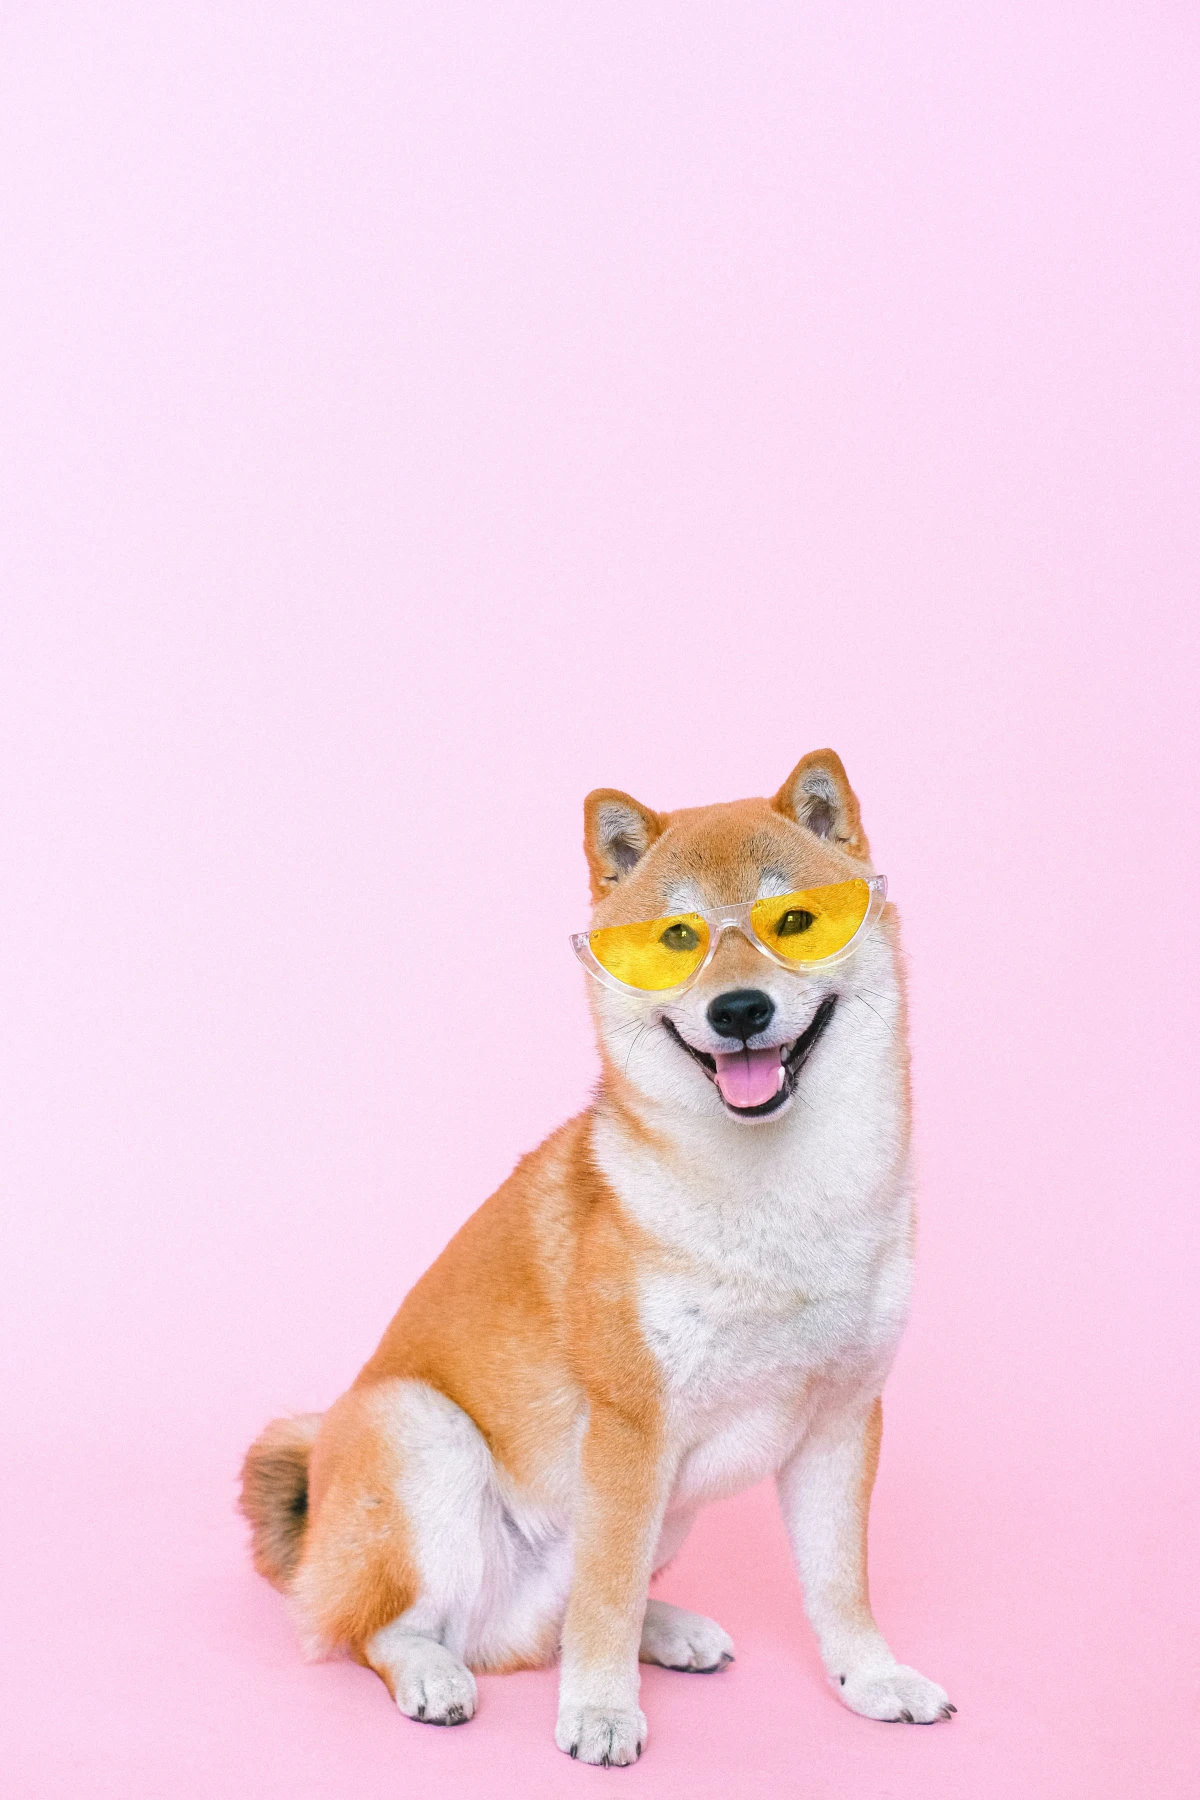 shiba inu dog with yellow glasses on pink backround